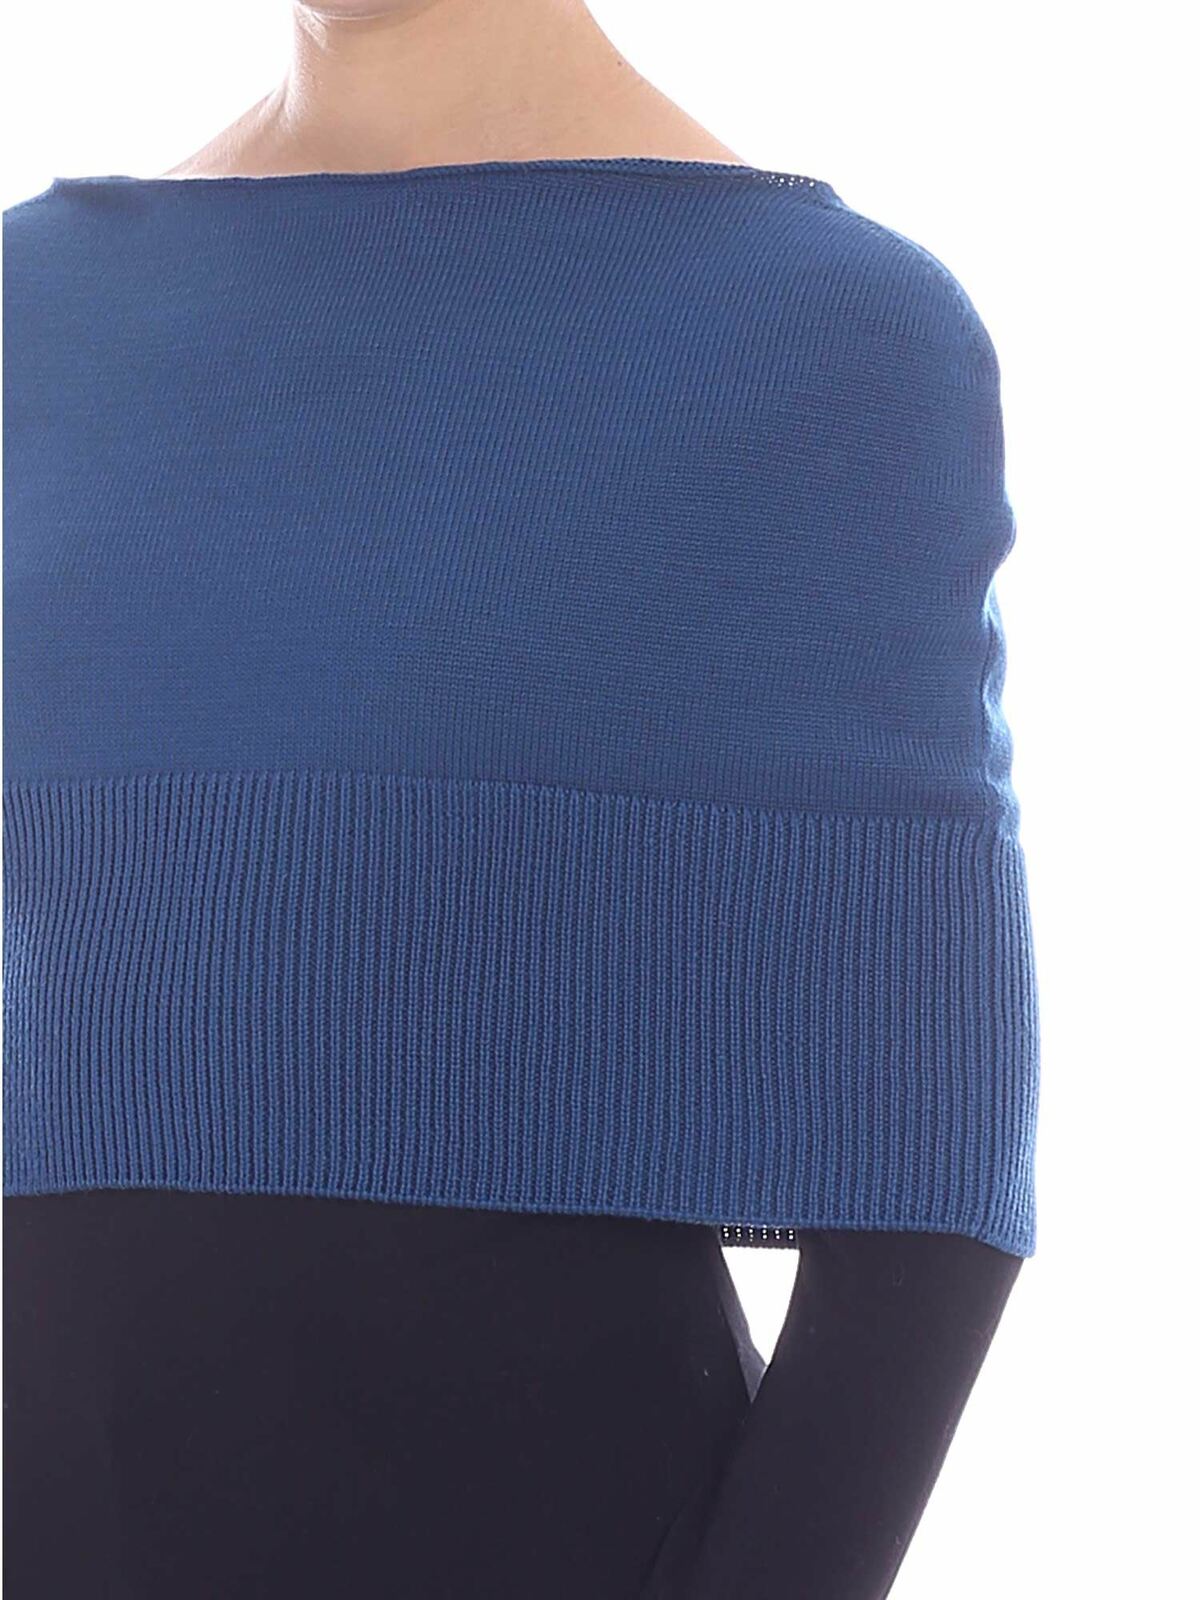 Shop Fuzzi Blue Knitted Cache-coeur